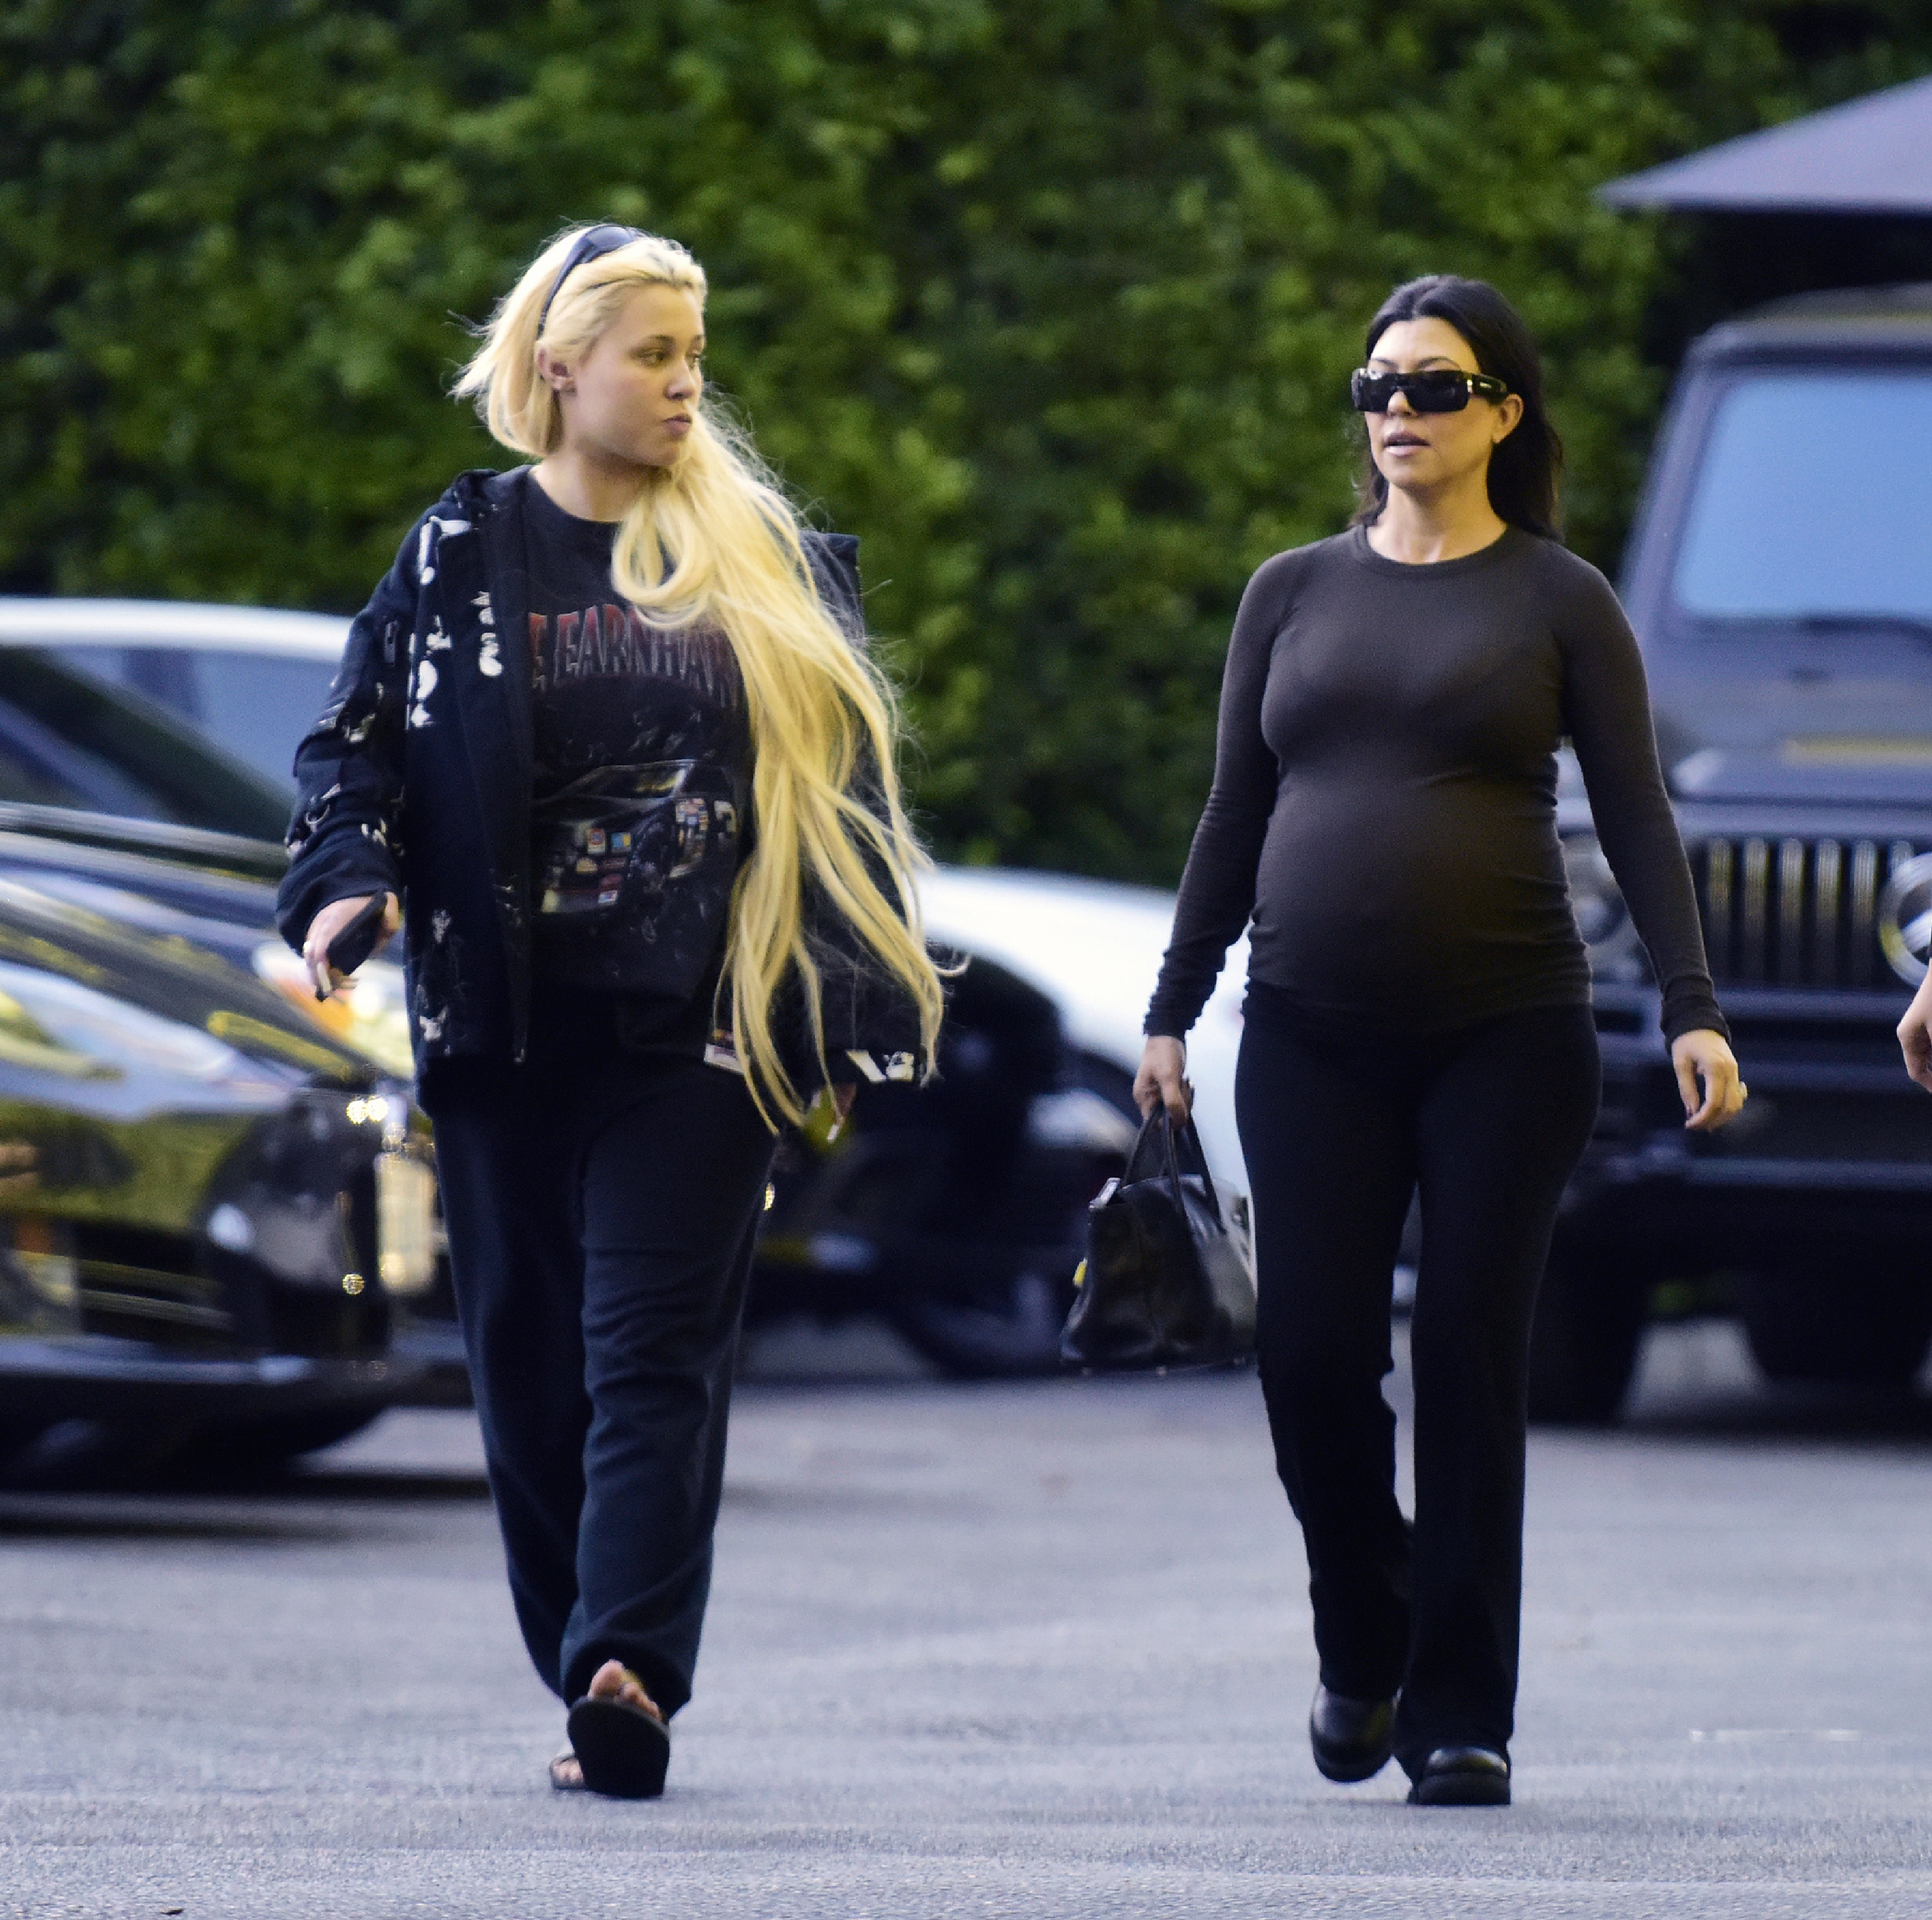 Alabama Barker and a pregnant Kourtney Kardashian walking in a parking lot